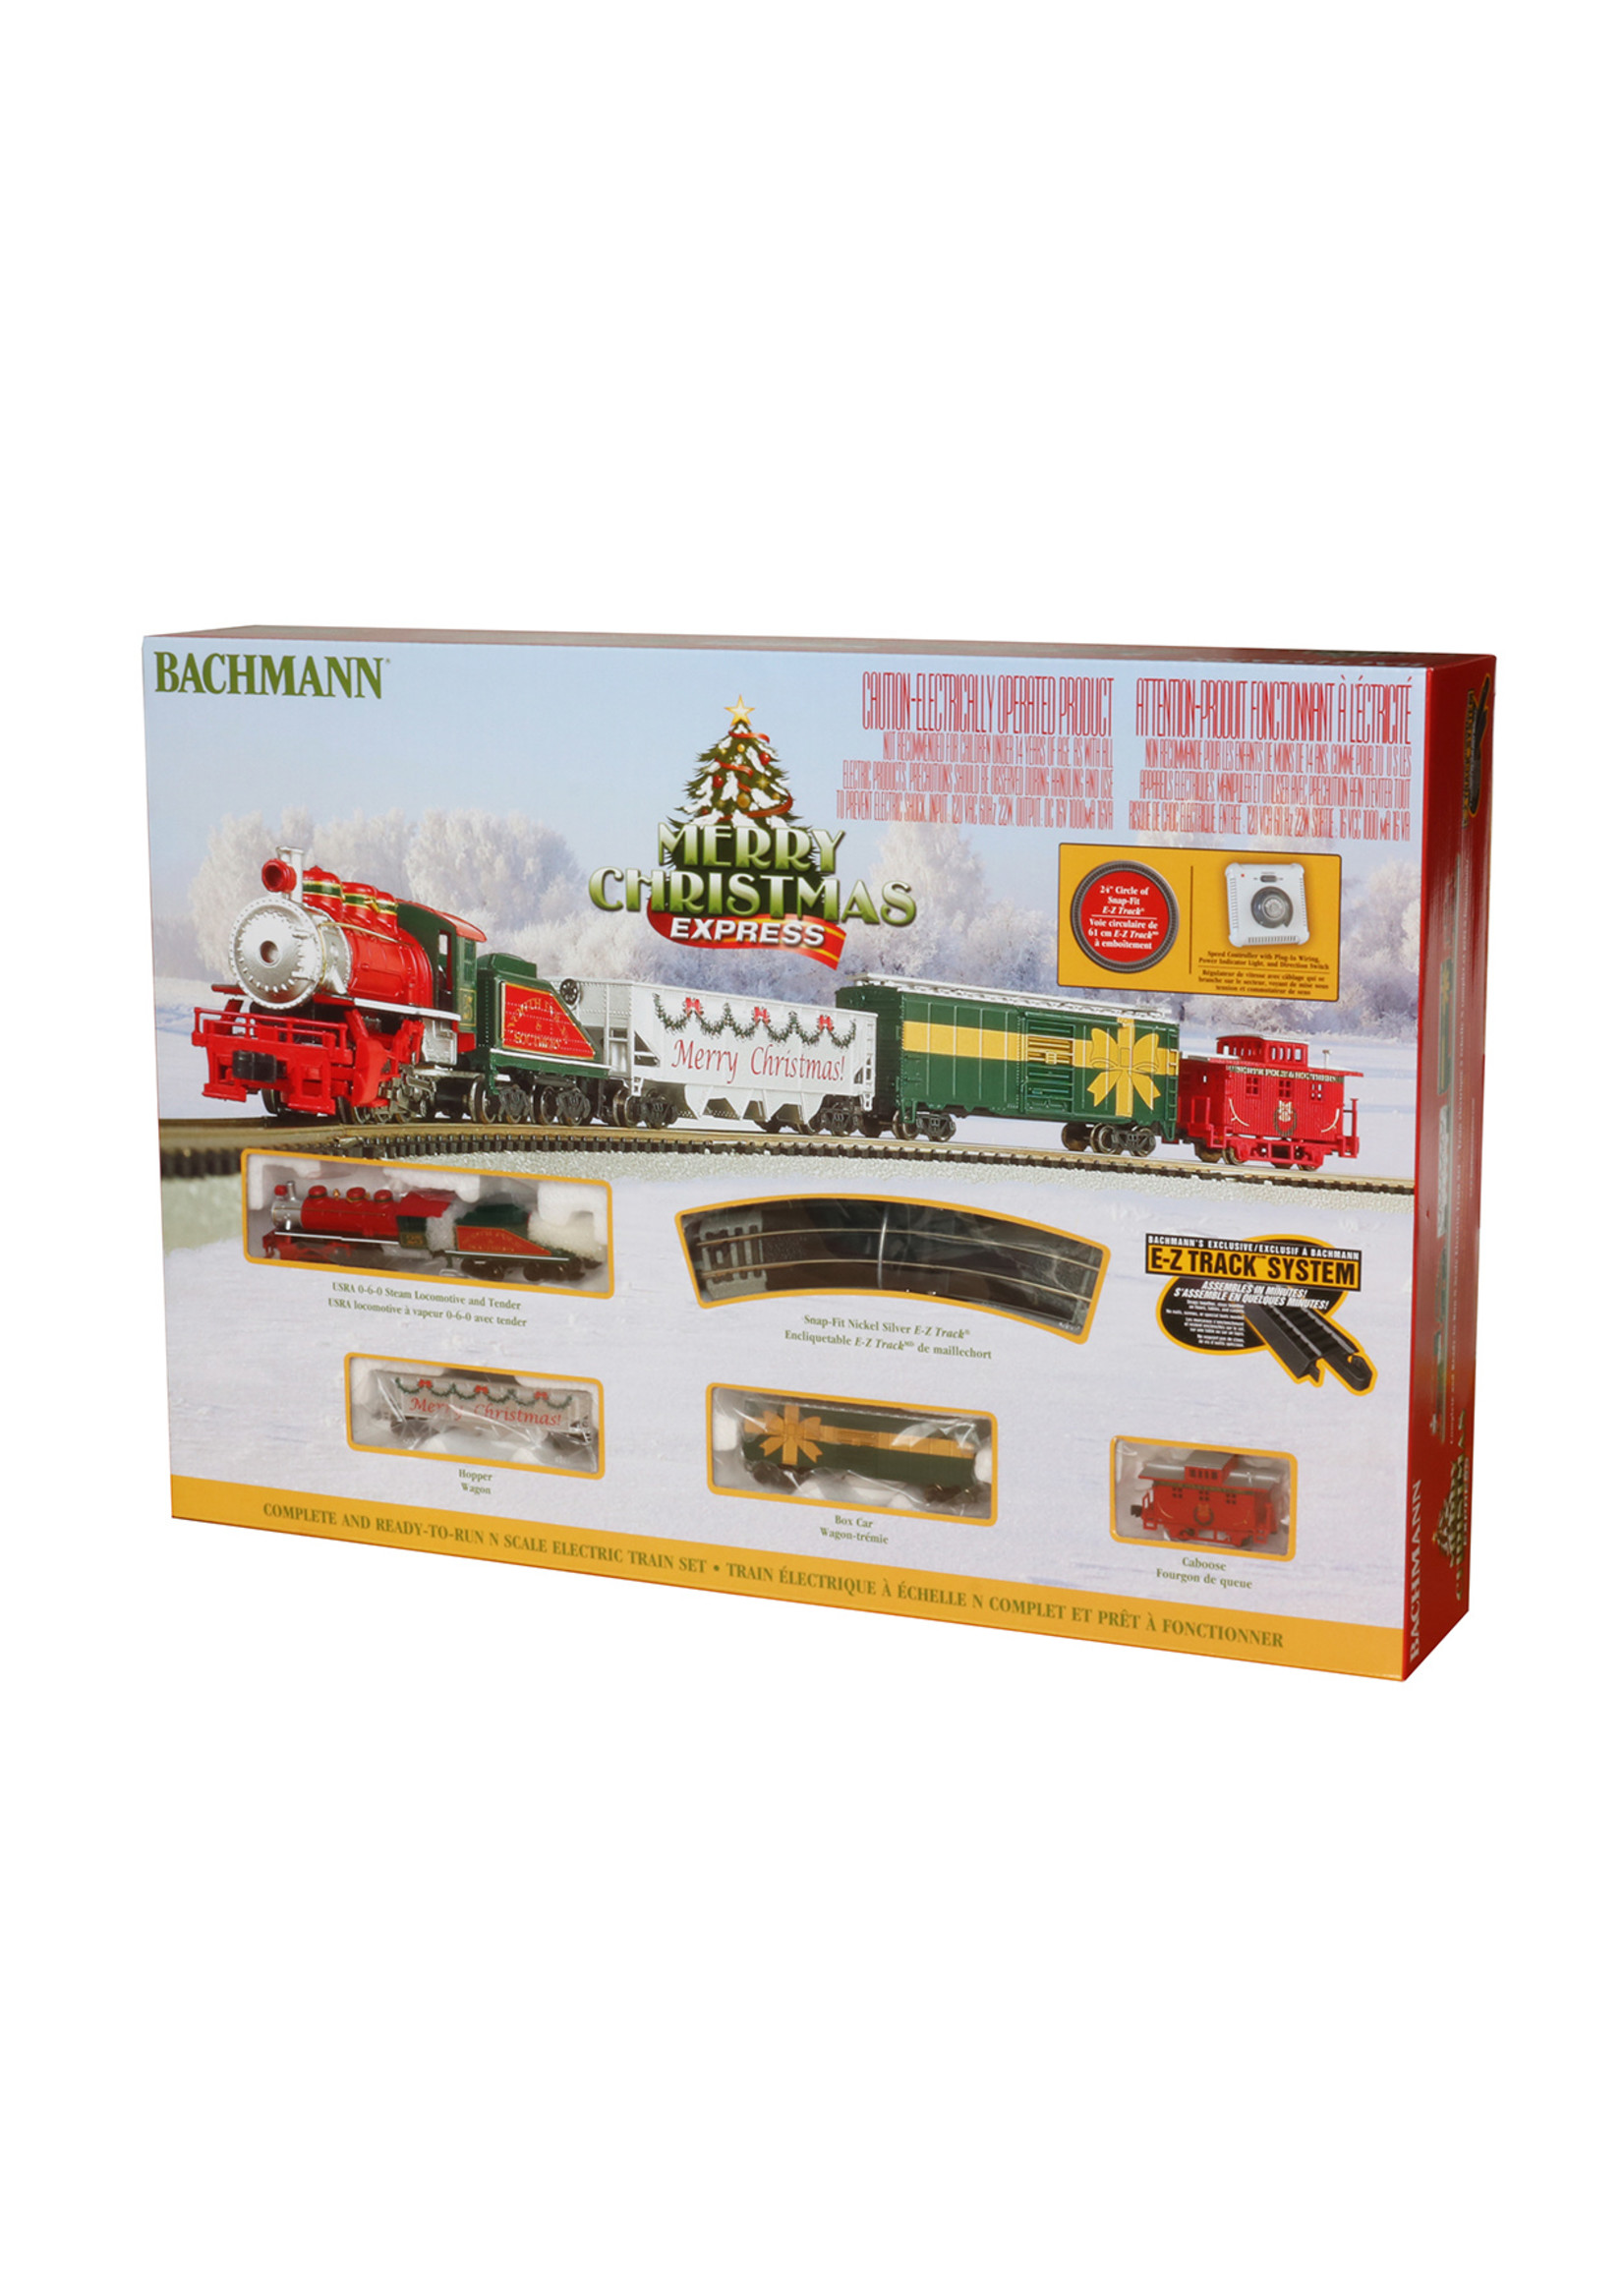 Bachmann Merry Christmas Express N Scale Train Set